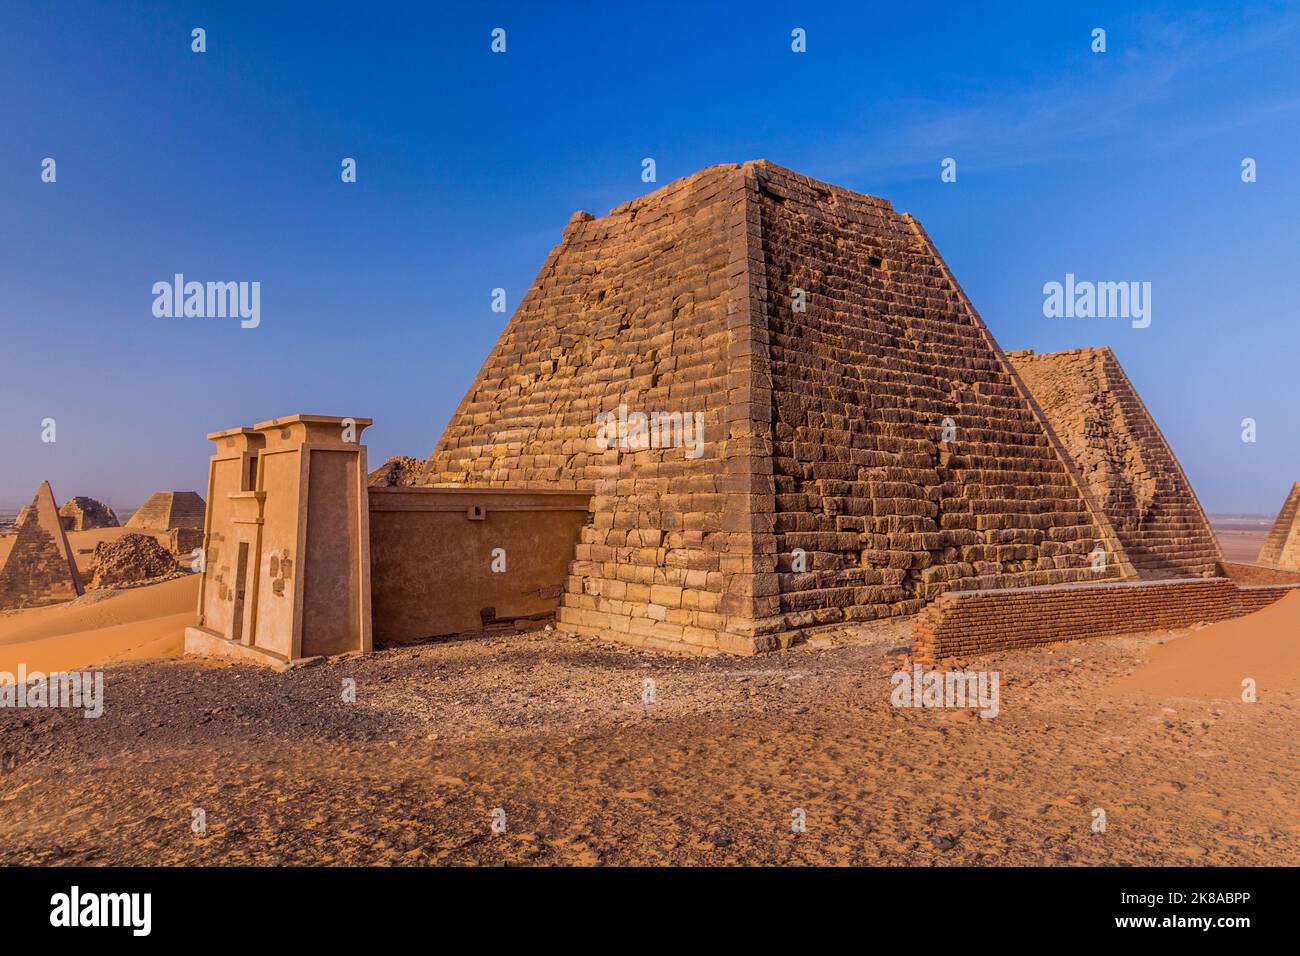 View of Meroe pyramids in Sudan Stock Photo